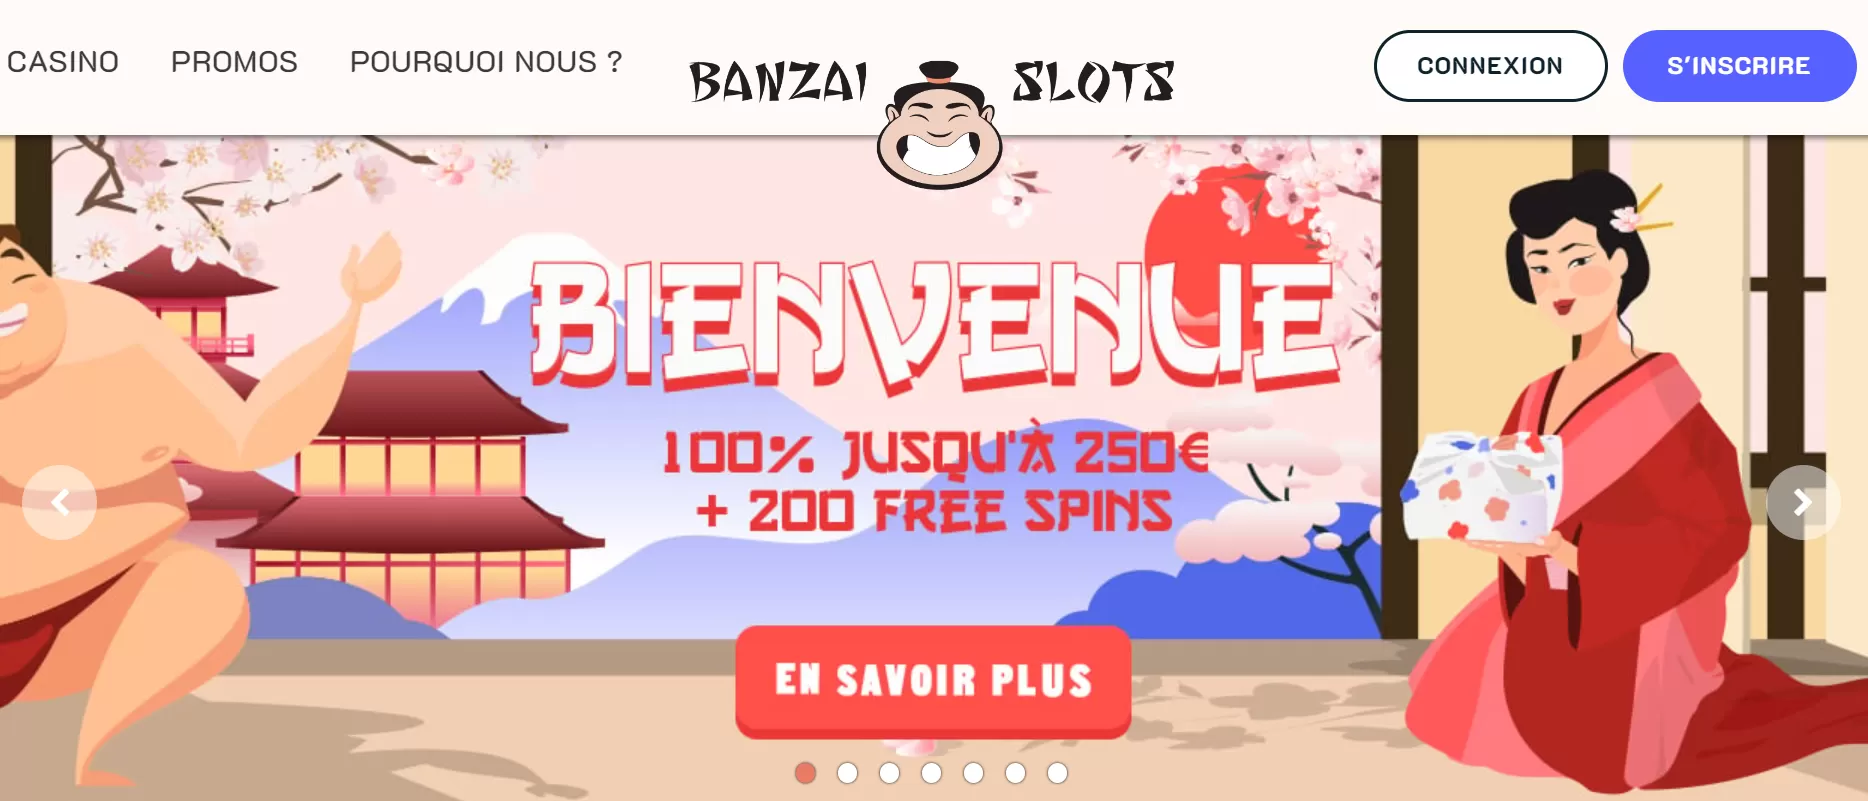 banzai slots homepage